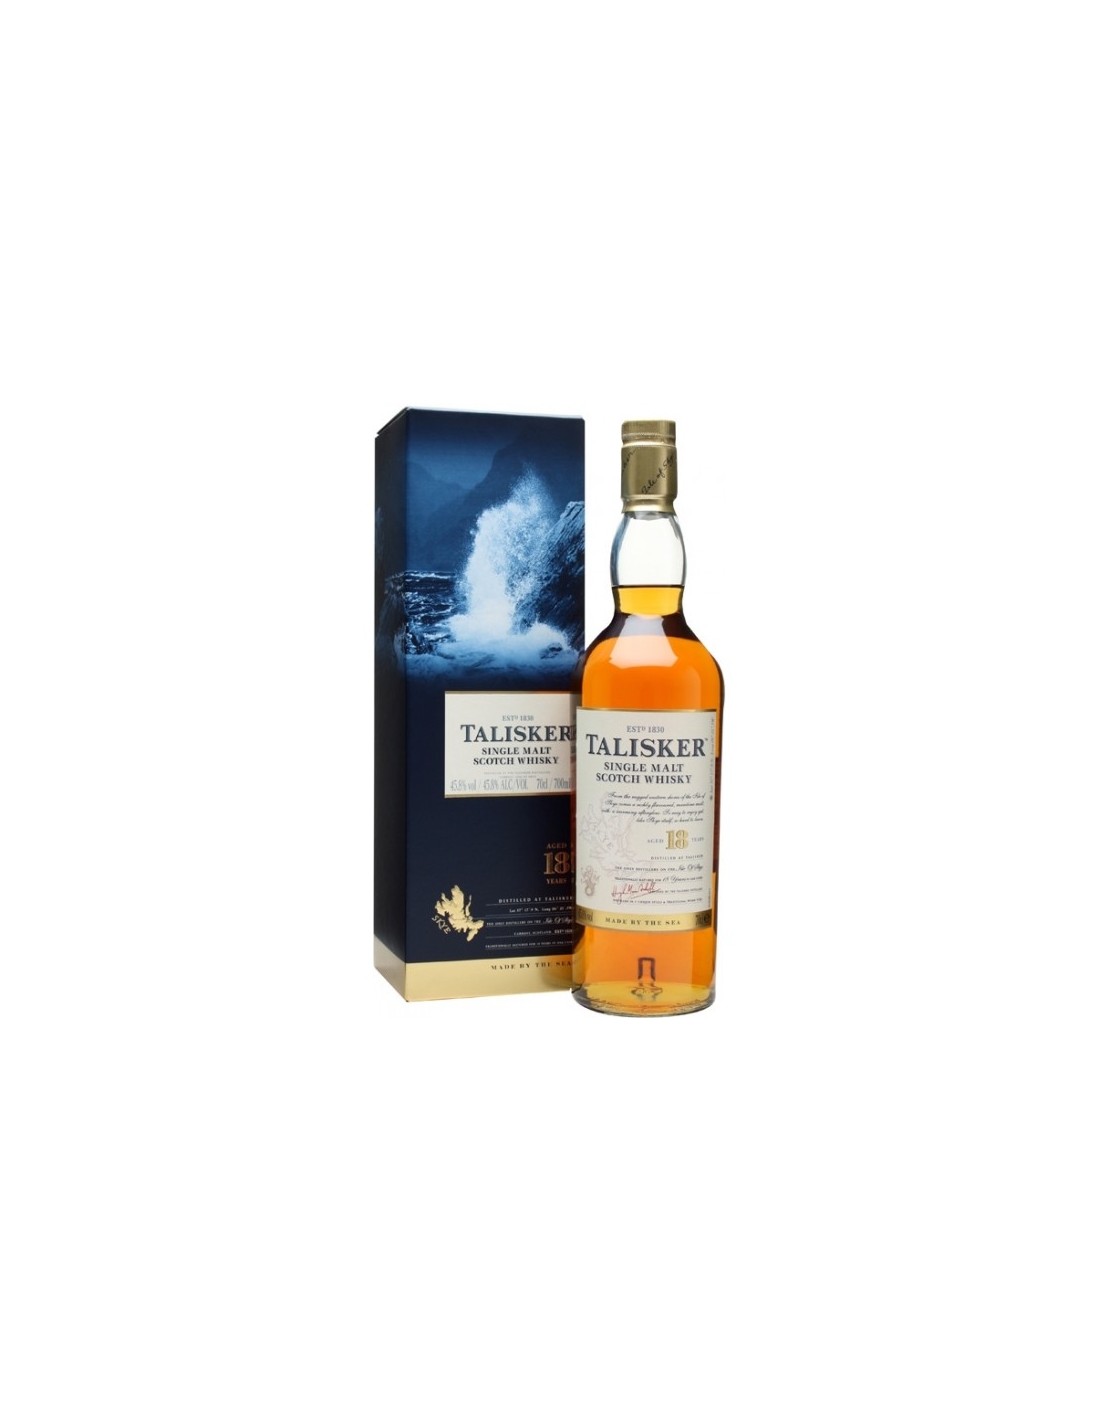 Whisky Talisker, 0.7L, 18 ani, 45.8% alc., Scotia alcooldiscount.ro